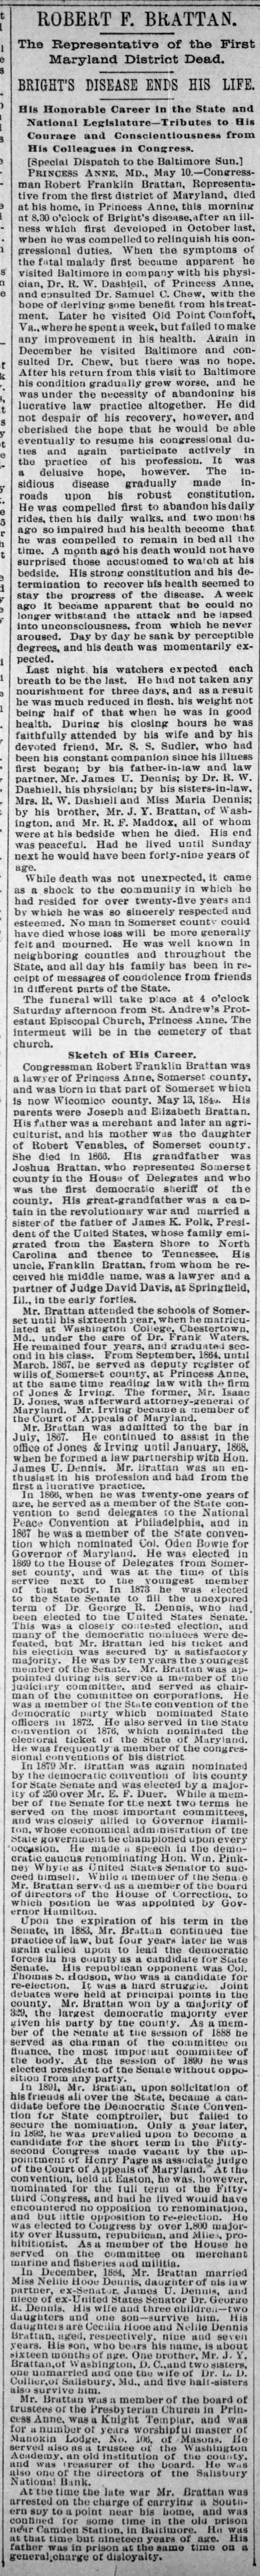 Robert F. Brattan; 11 May 1894; The Baltimore Sun; 6